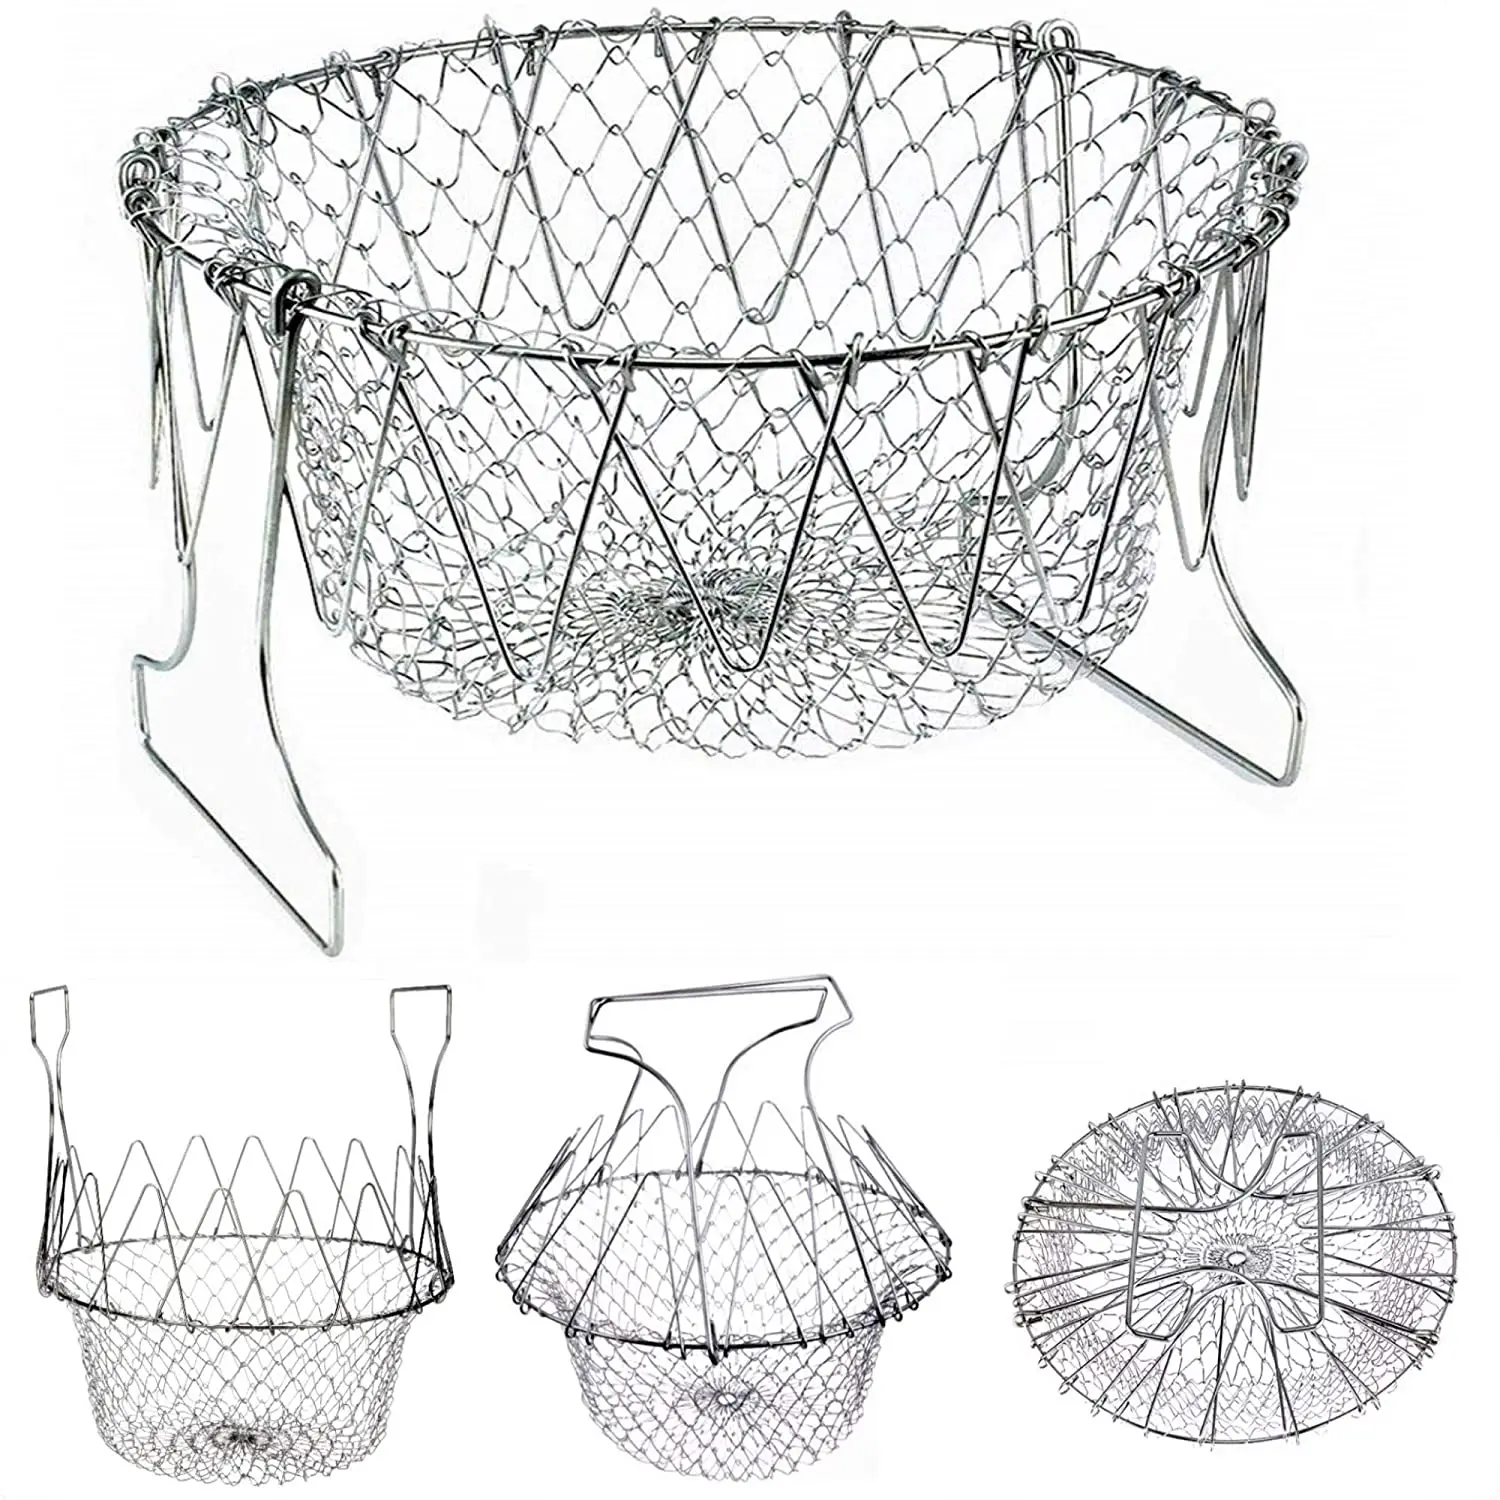 

Amazon Hot Sale 304 Stainless Steel Mesh Net Colander Collapsible Food Strainer Vegetable Steamer Basket with Handle, Sliver